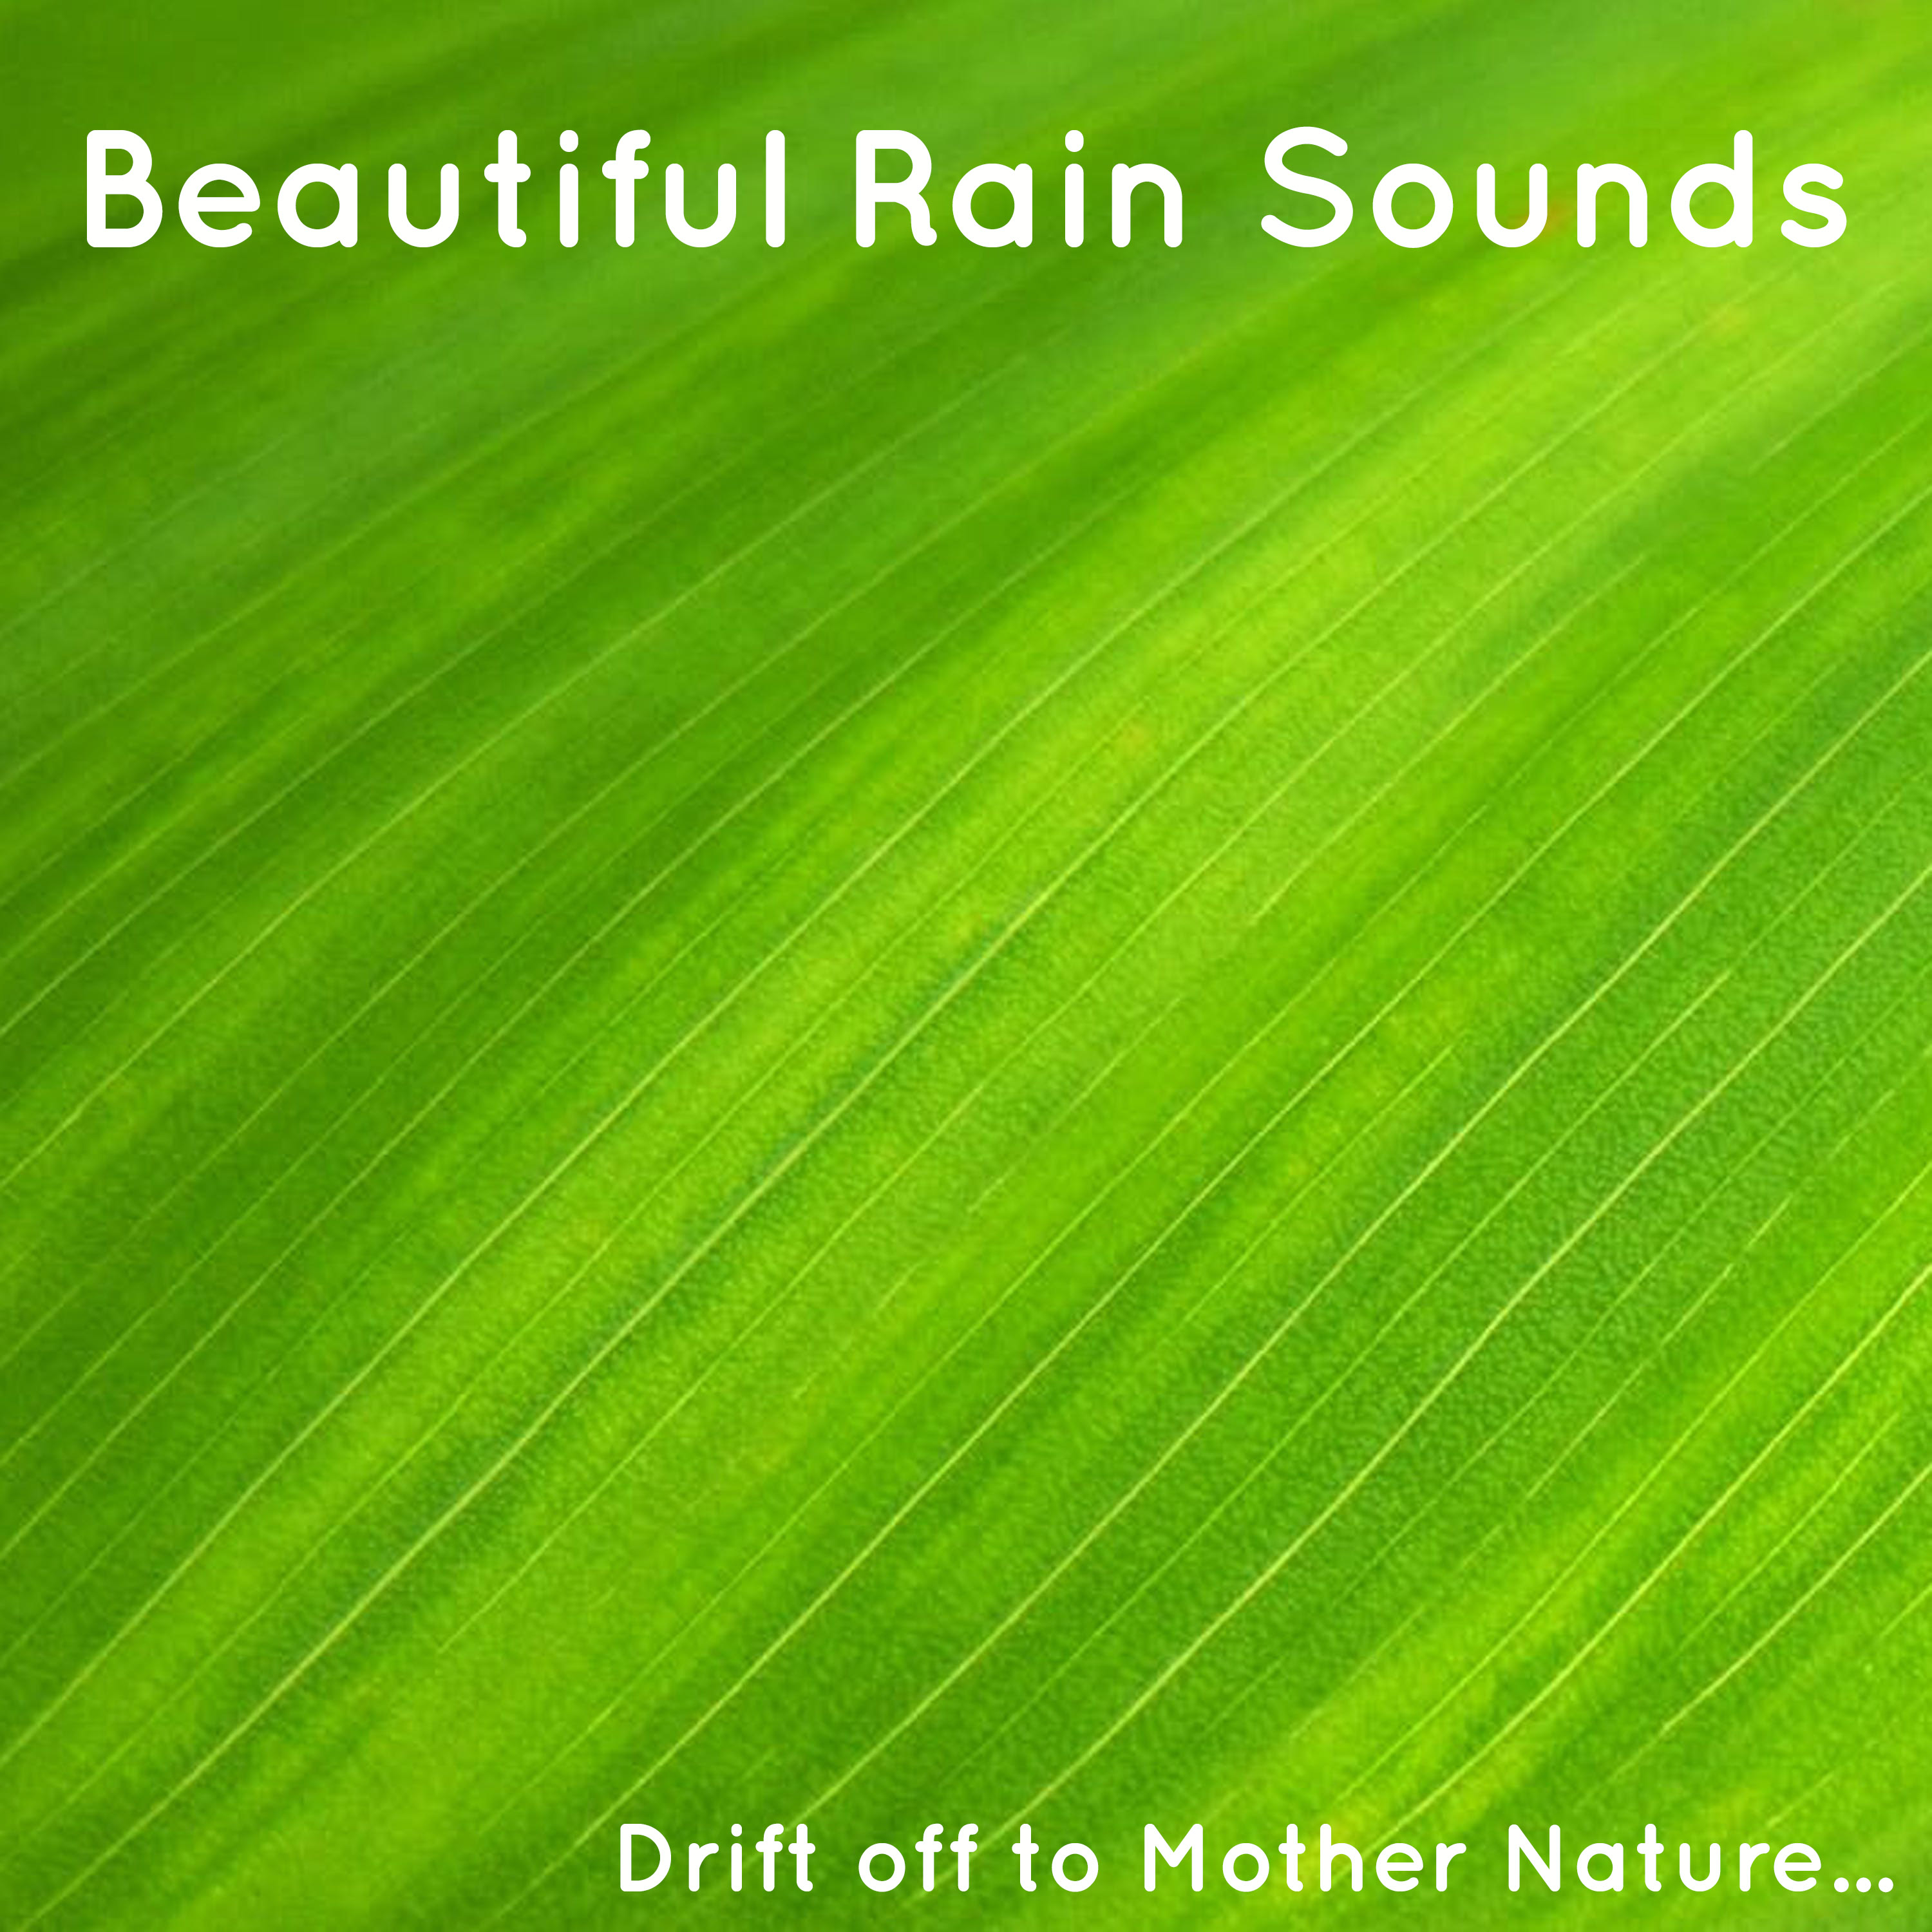 15 Beautiful Rain Sound. Drift Off, Relax, Meditate to Mother Nature